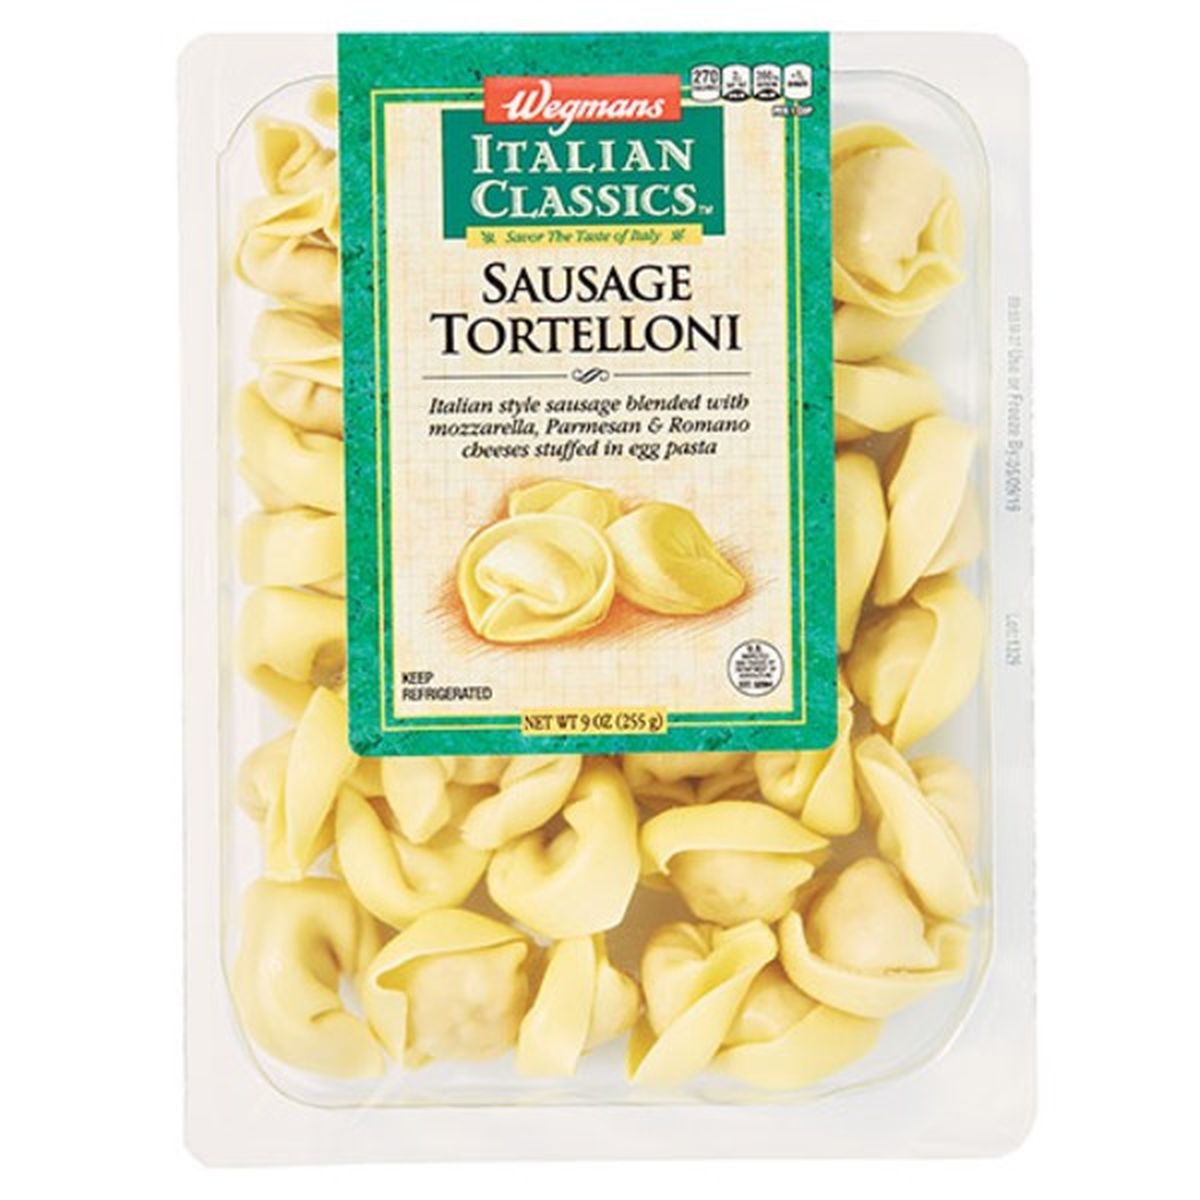 Calories in Wegmans Italian Classics Sausage Tortelloni